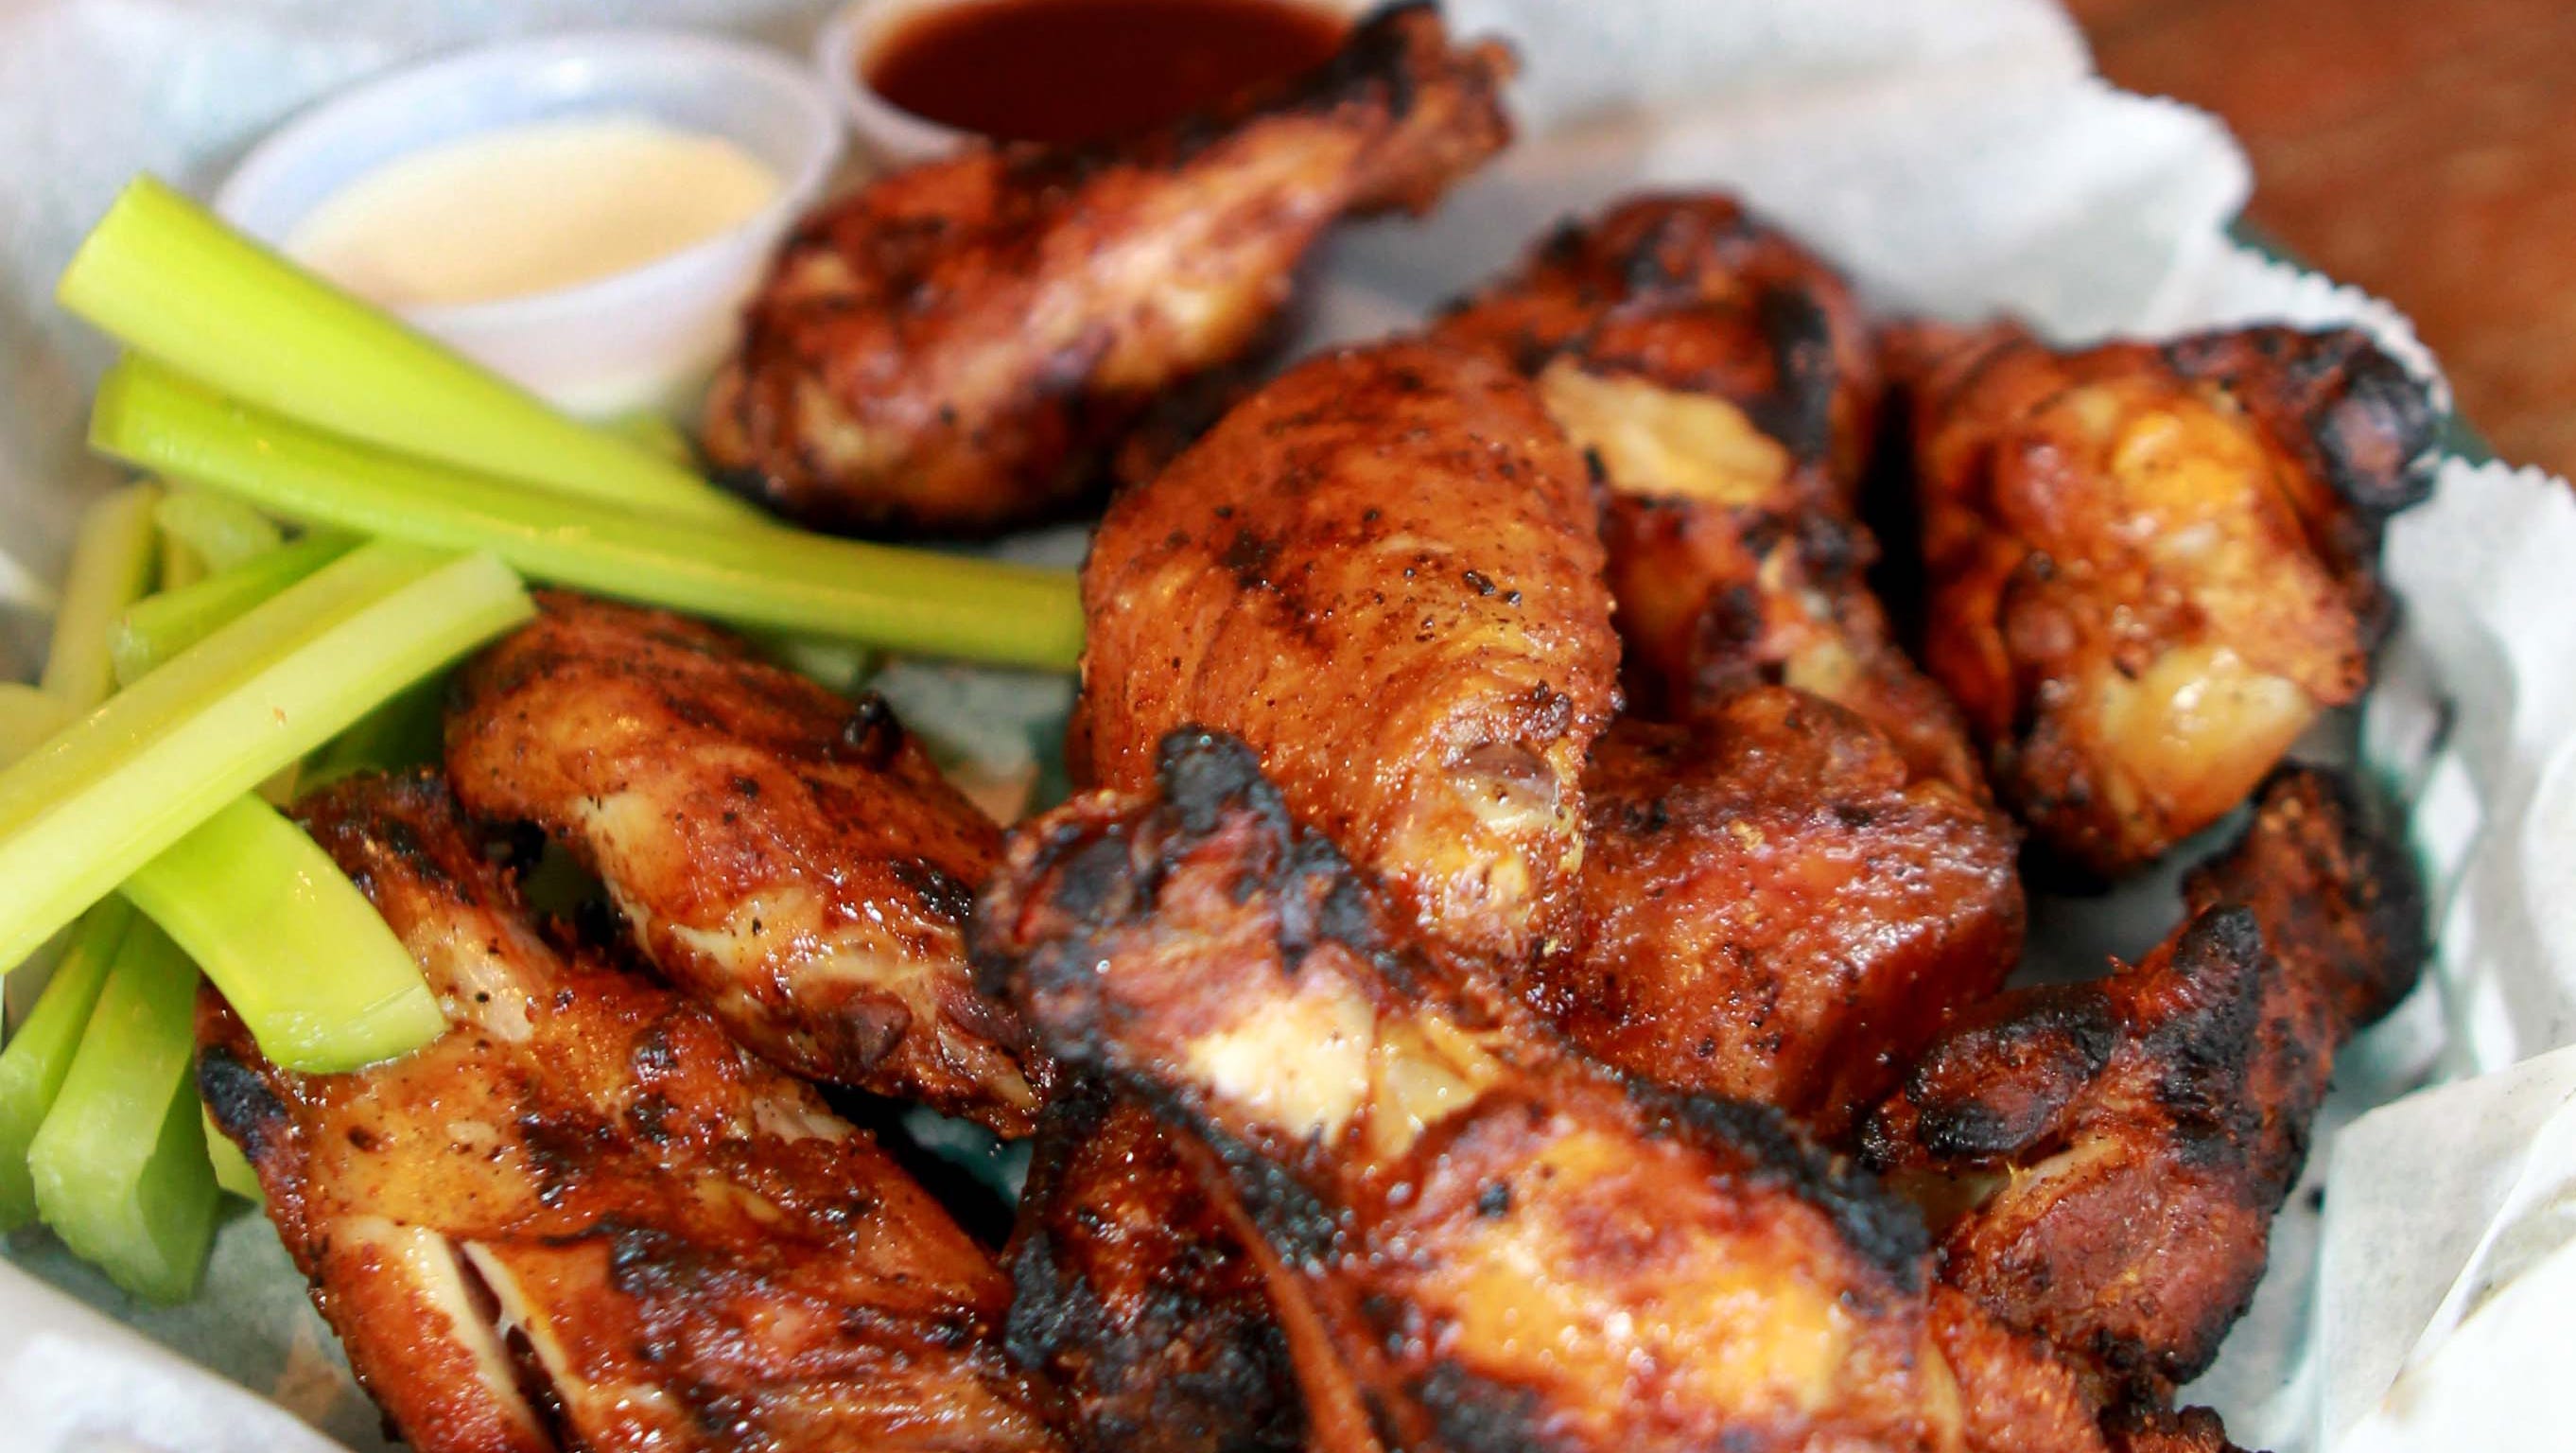 Best chicken wings in Cincinnati? Readers suggested this place